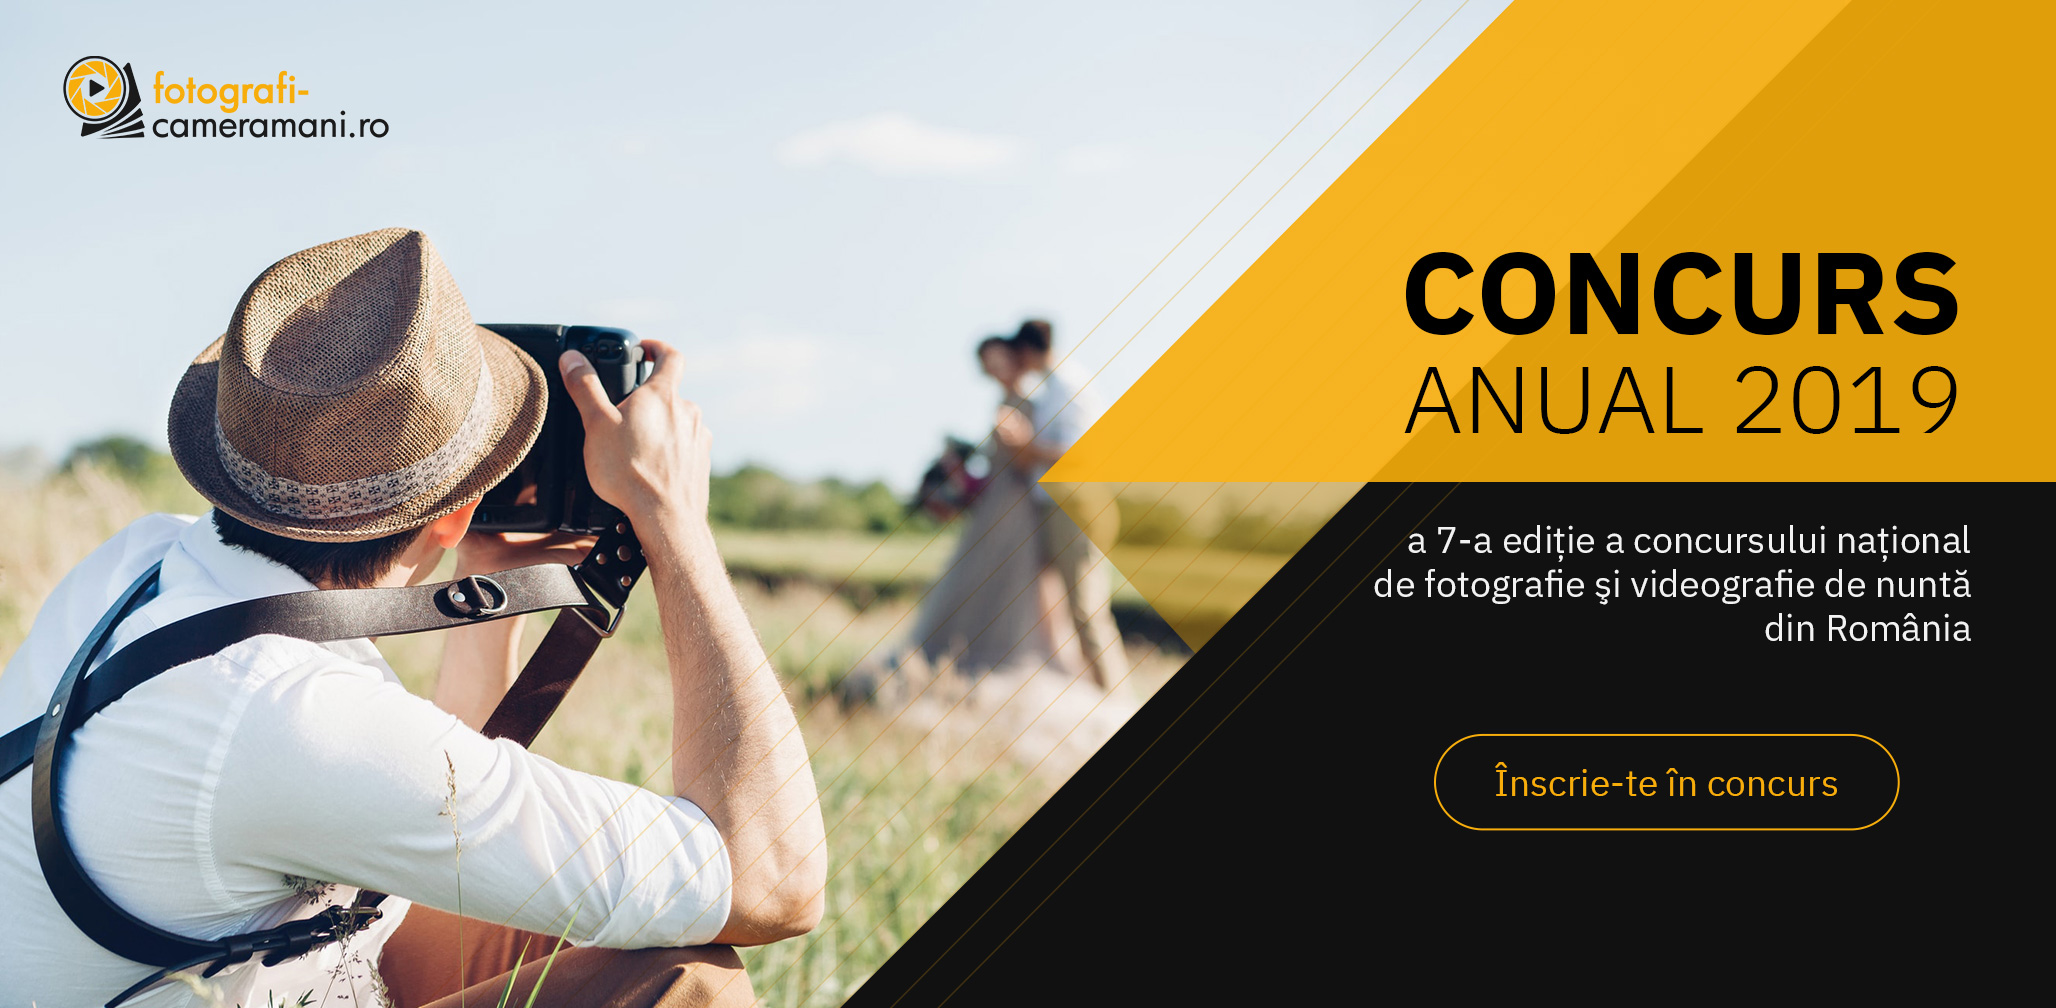 en anden Uventet Krudt Concursul anual de fotografie - 2019. Fotografi-Cameramani.ro